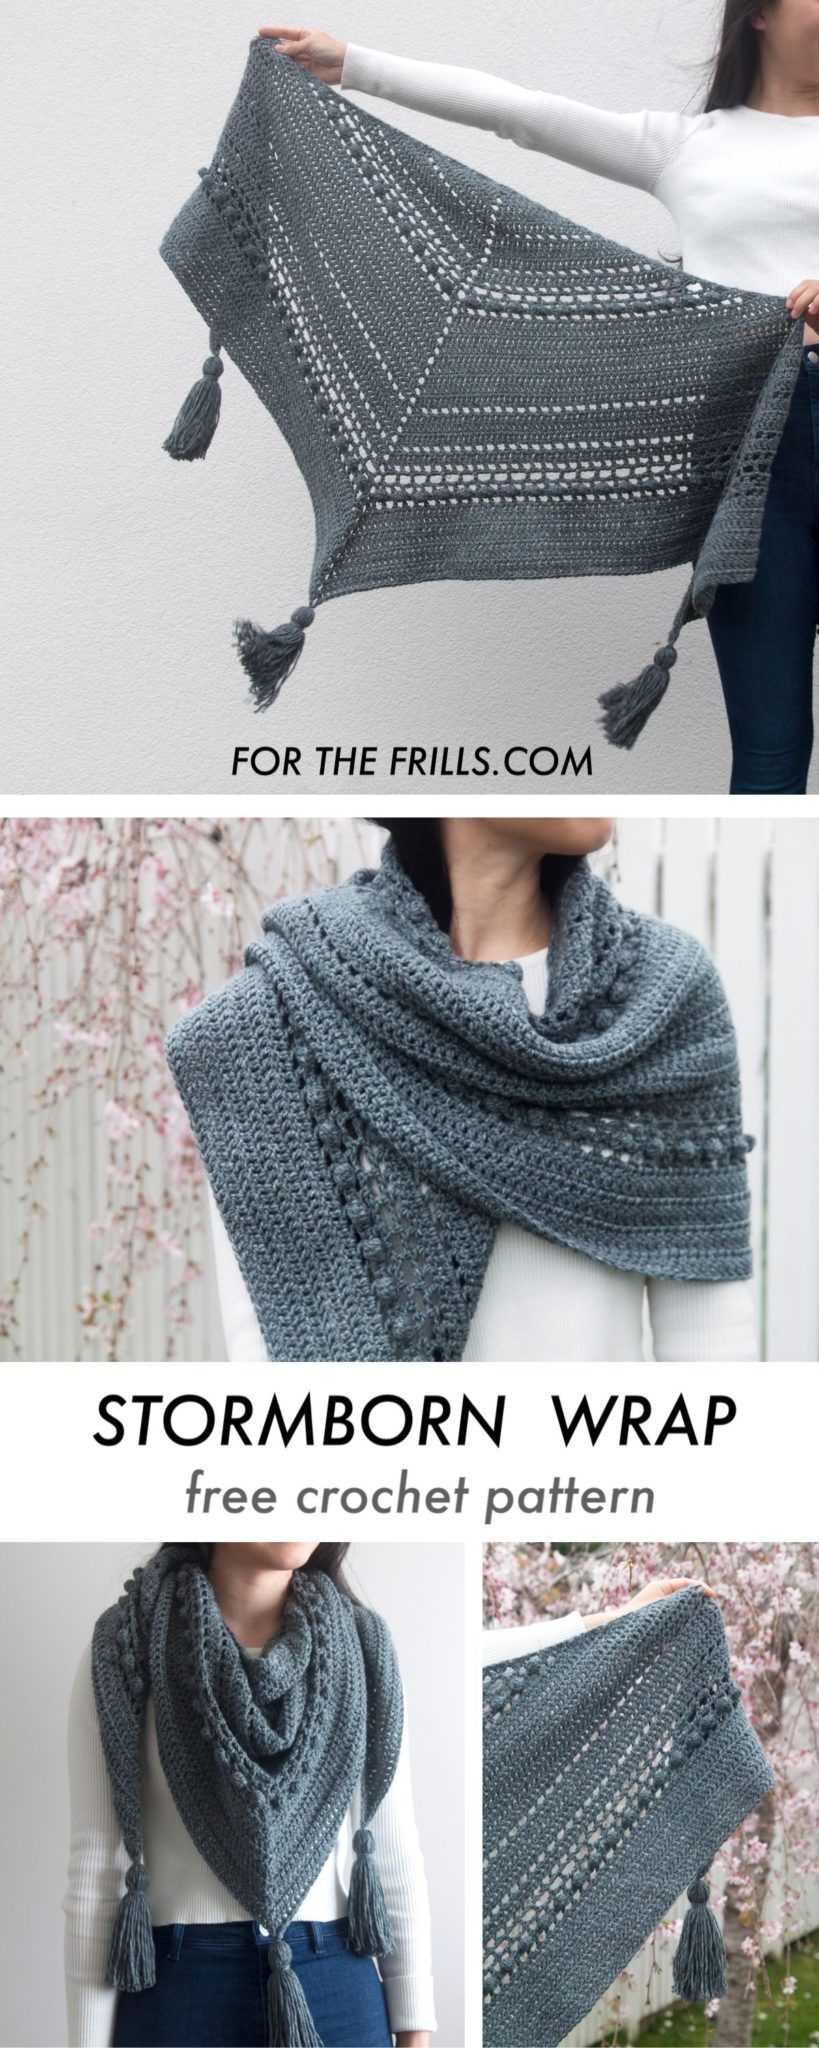 Crochet Stormborn Wrap – free crochet pattern – for the frills